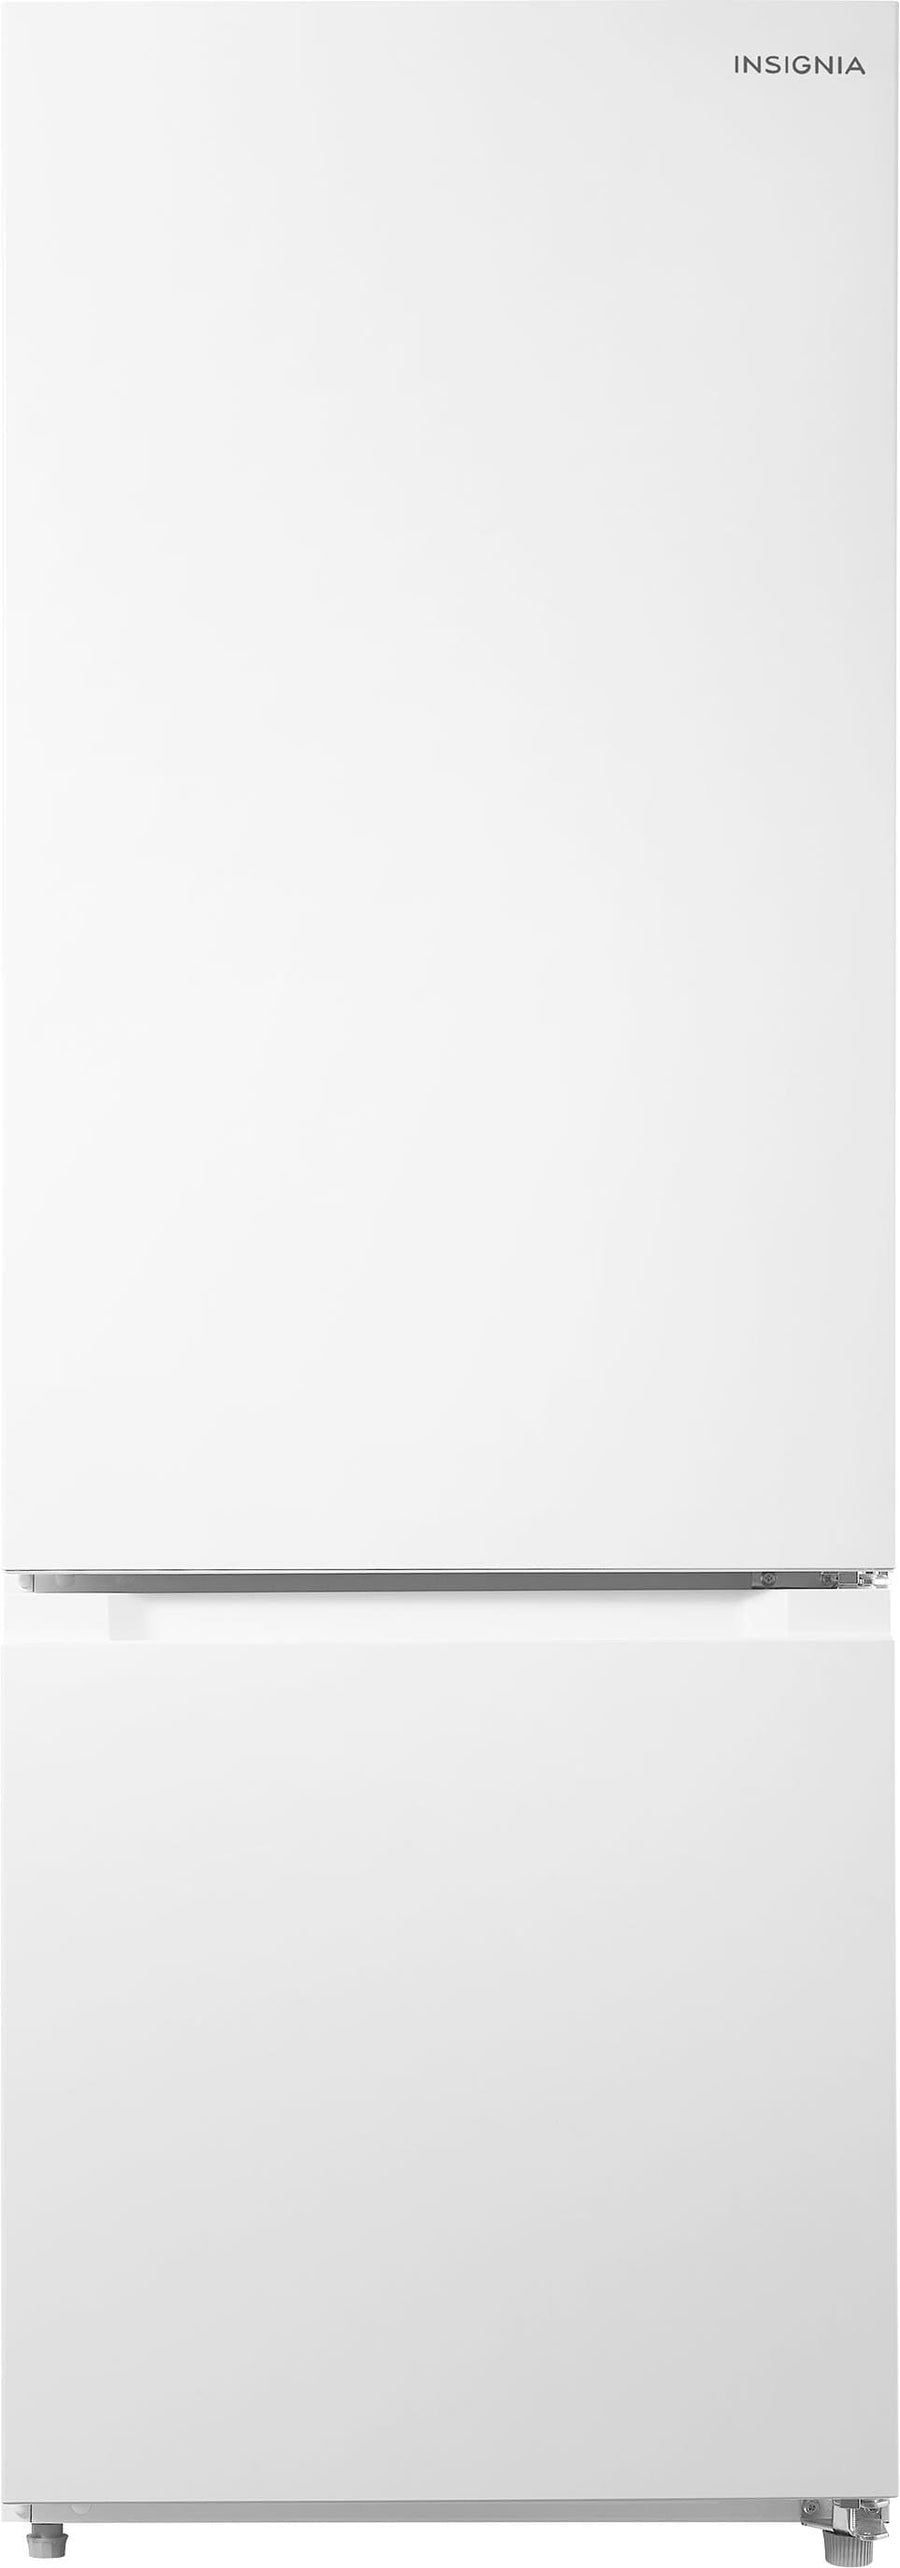 Insignia™ - 11.5 Cu. Ft. Bottom Mount Refrigerator - White_0